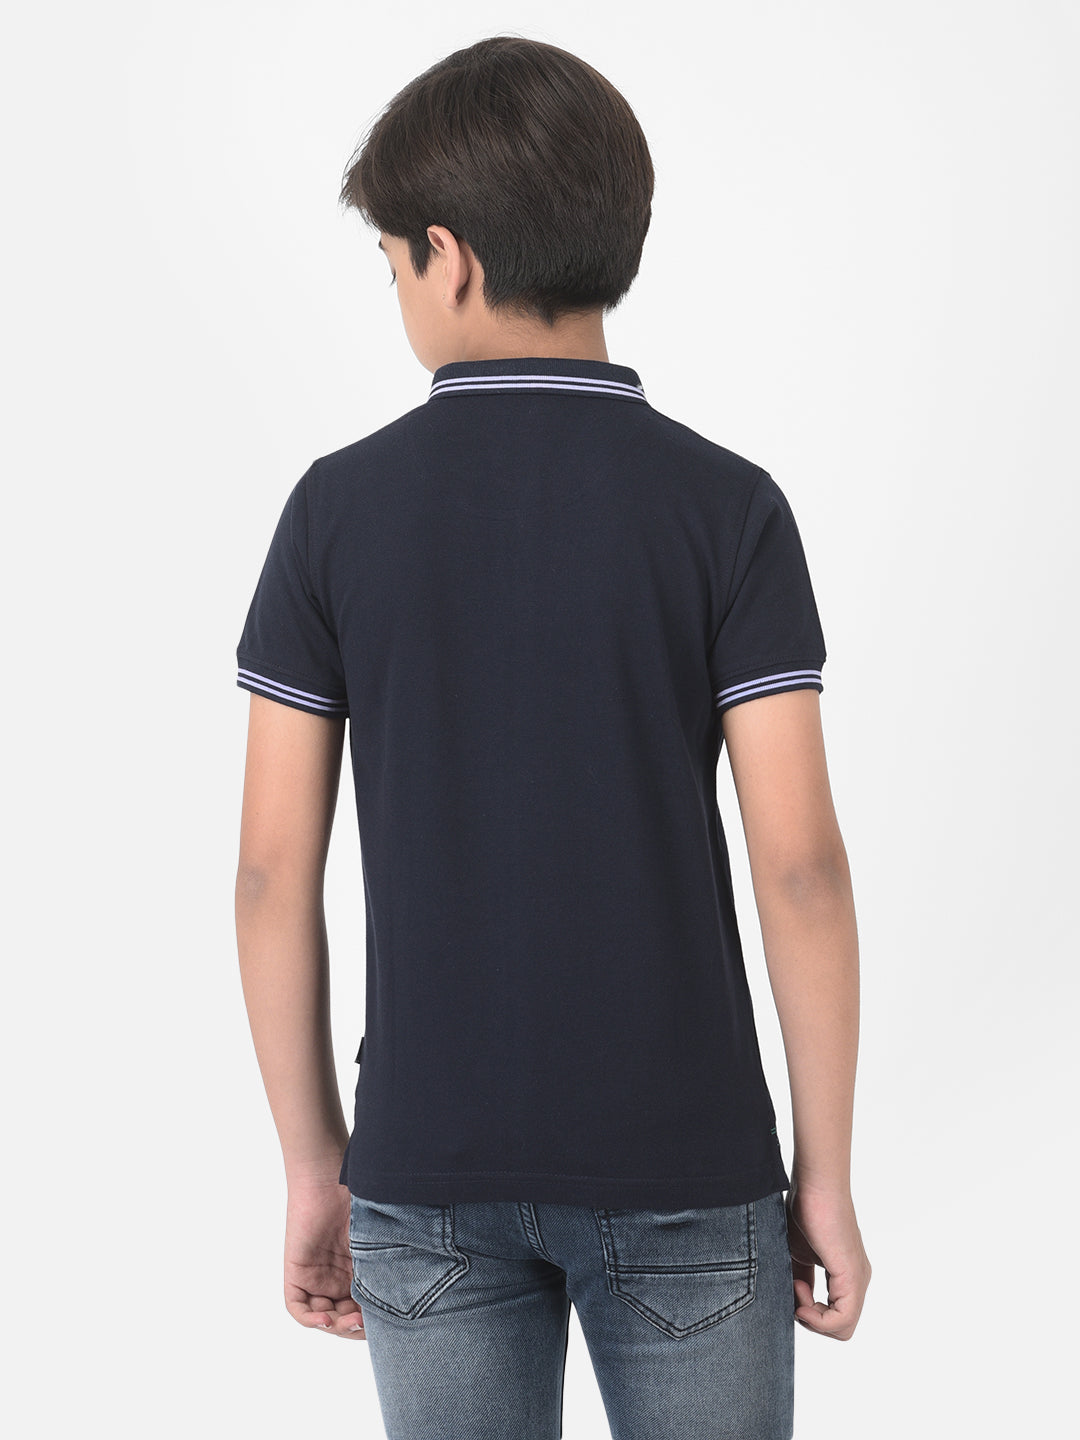 Navy Blue Printed Polo T-shirt - Boys T-Shirts